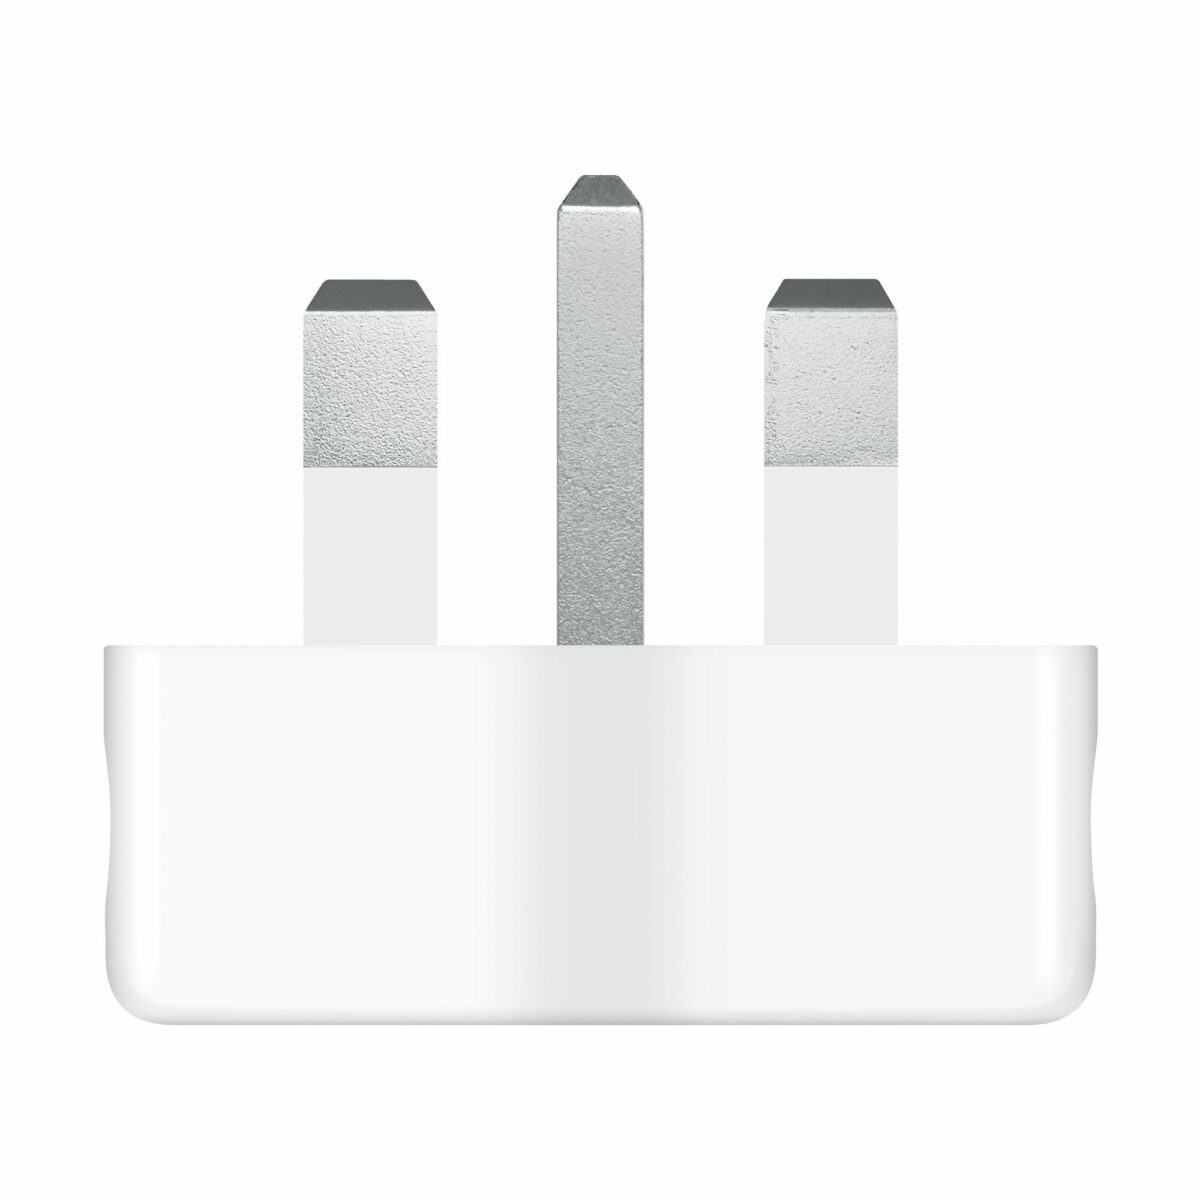 Apple World Travel Adapter Kit (2015)